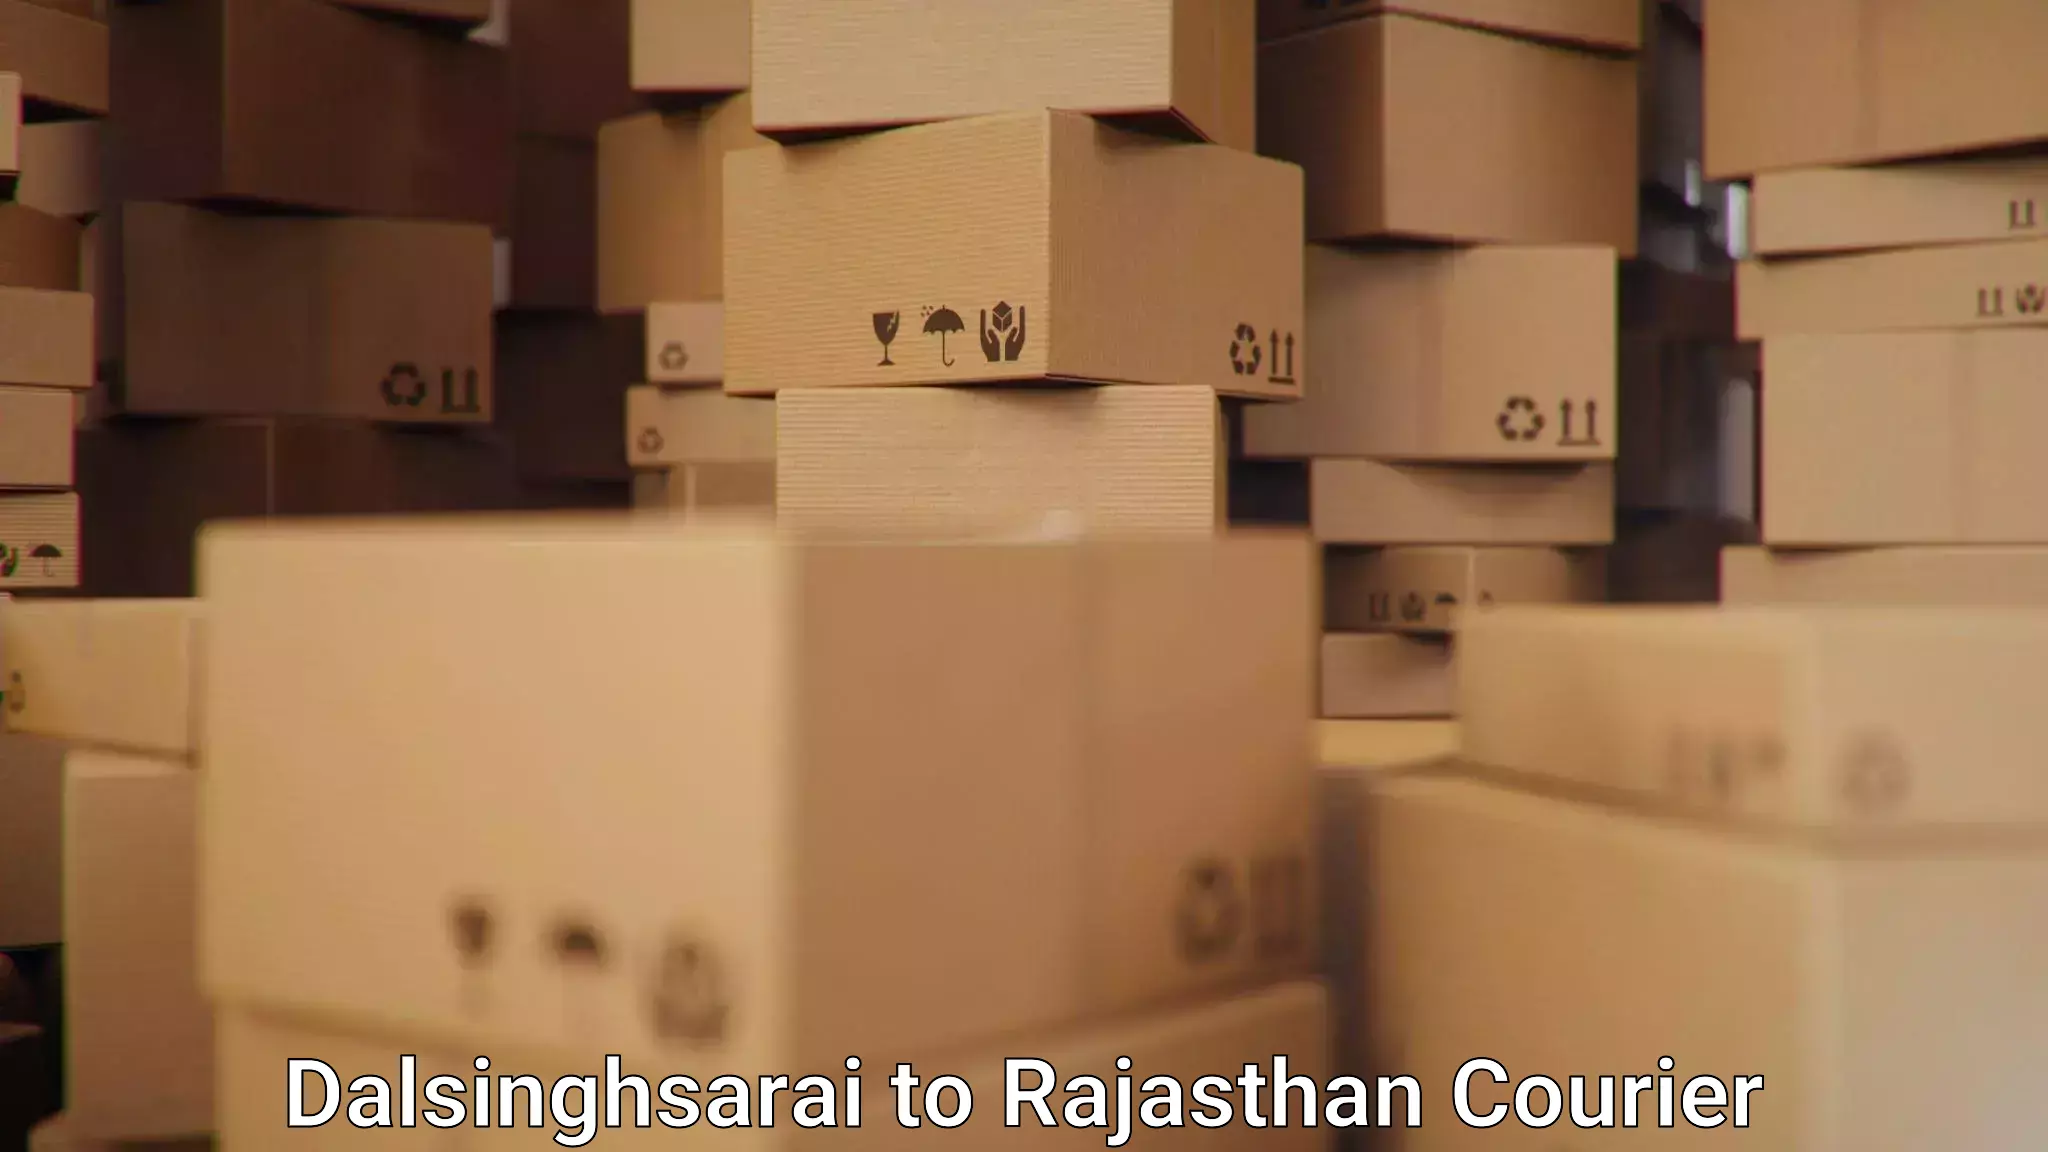 Efficient shipping platforms Dalsinghsarai to Rajasthan